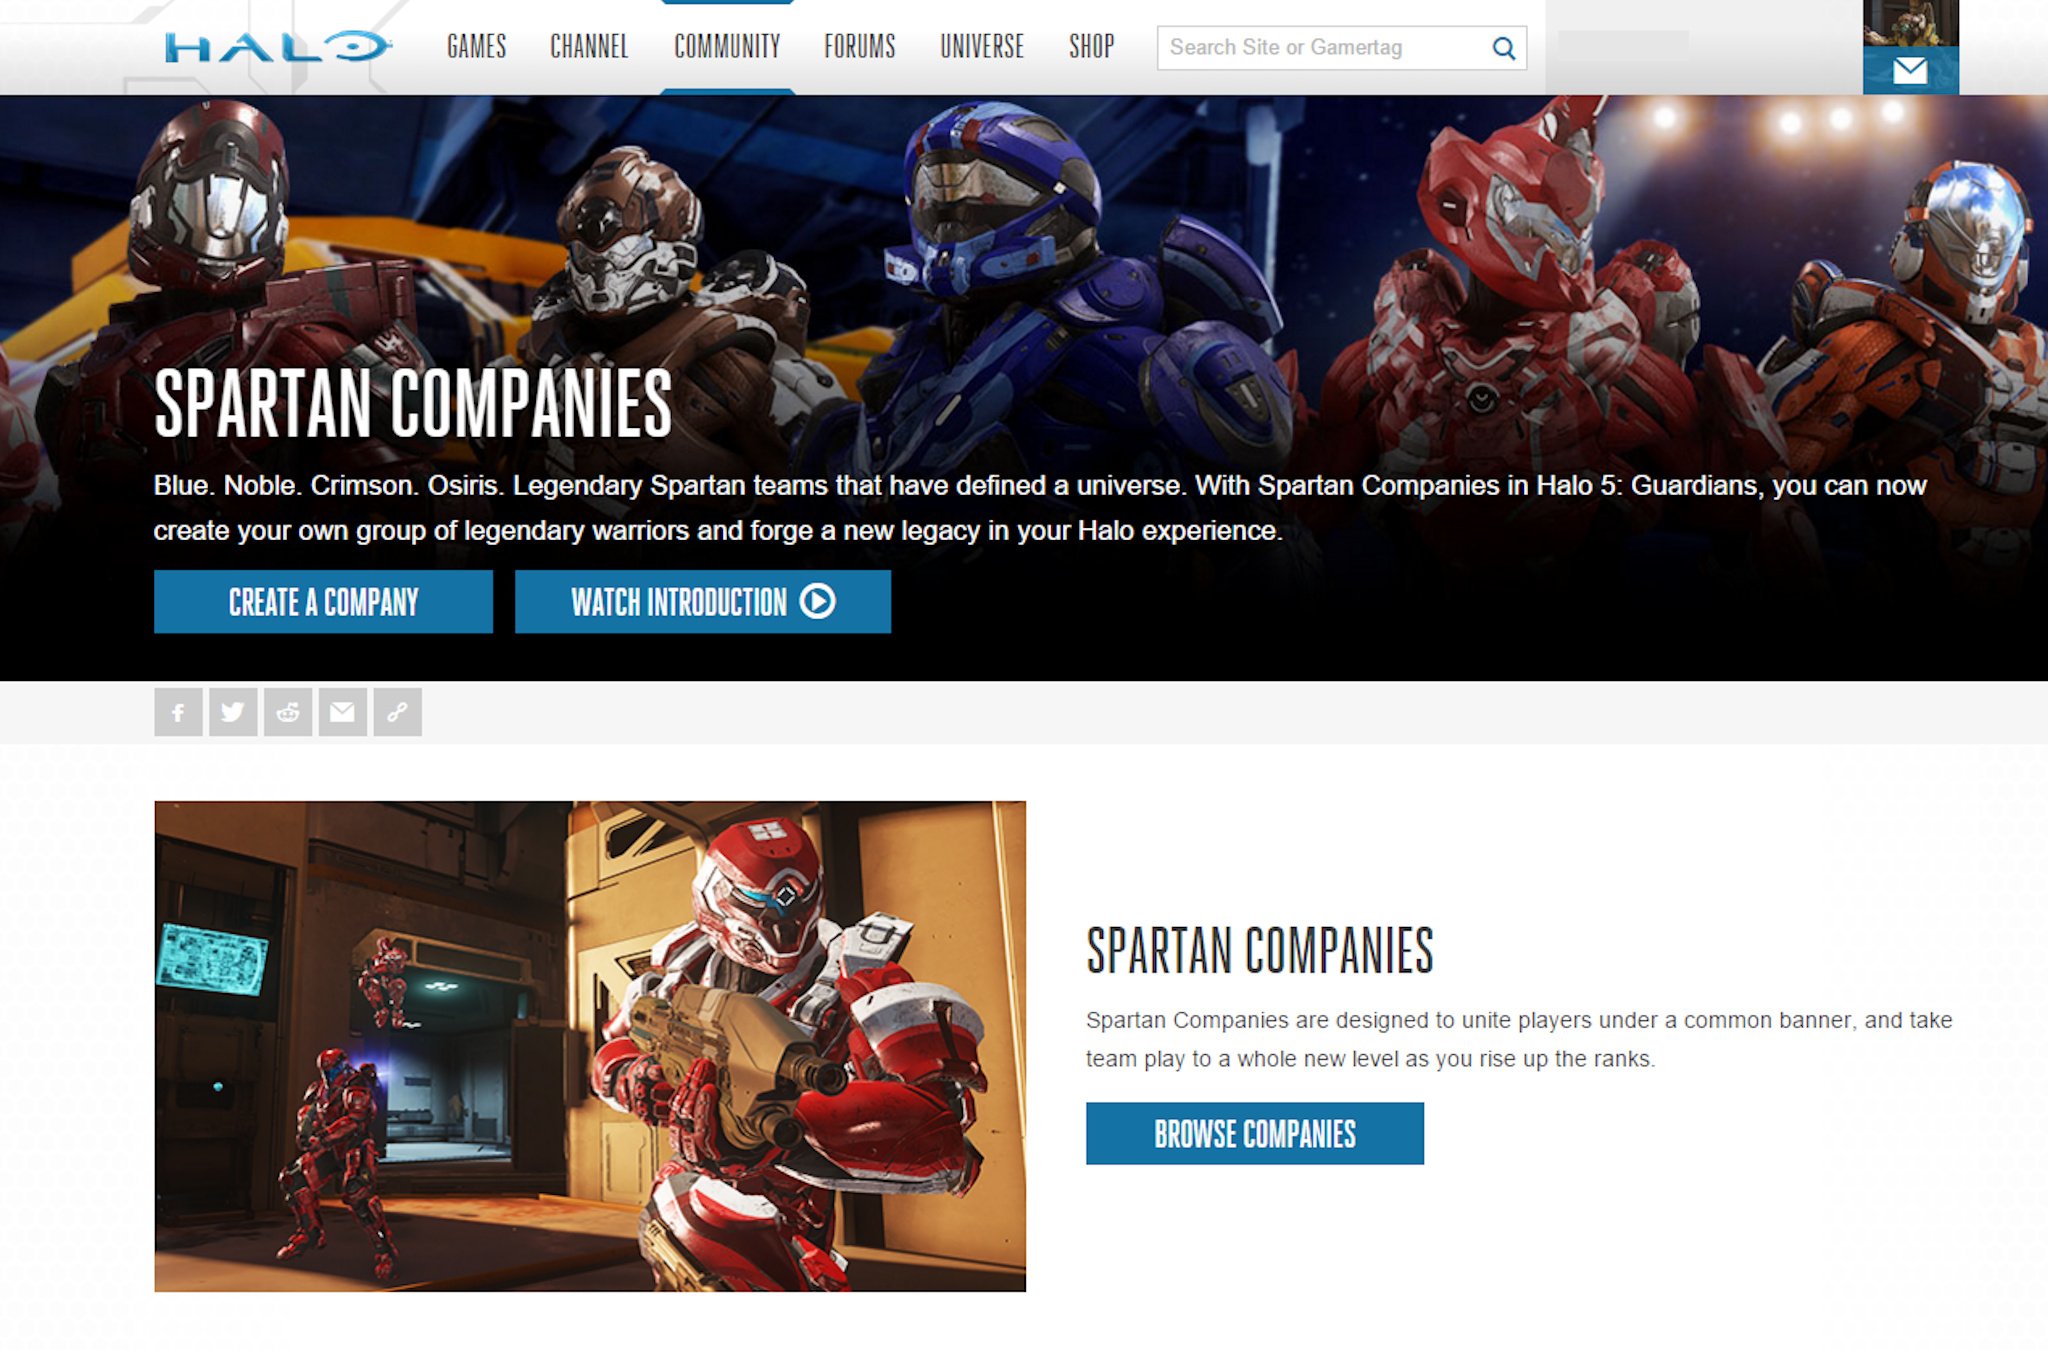 Halo 5 Spartan Companies guide